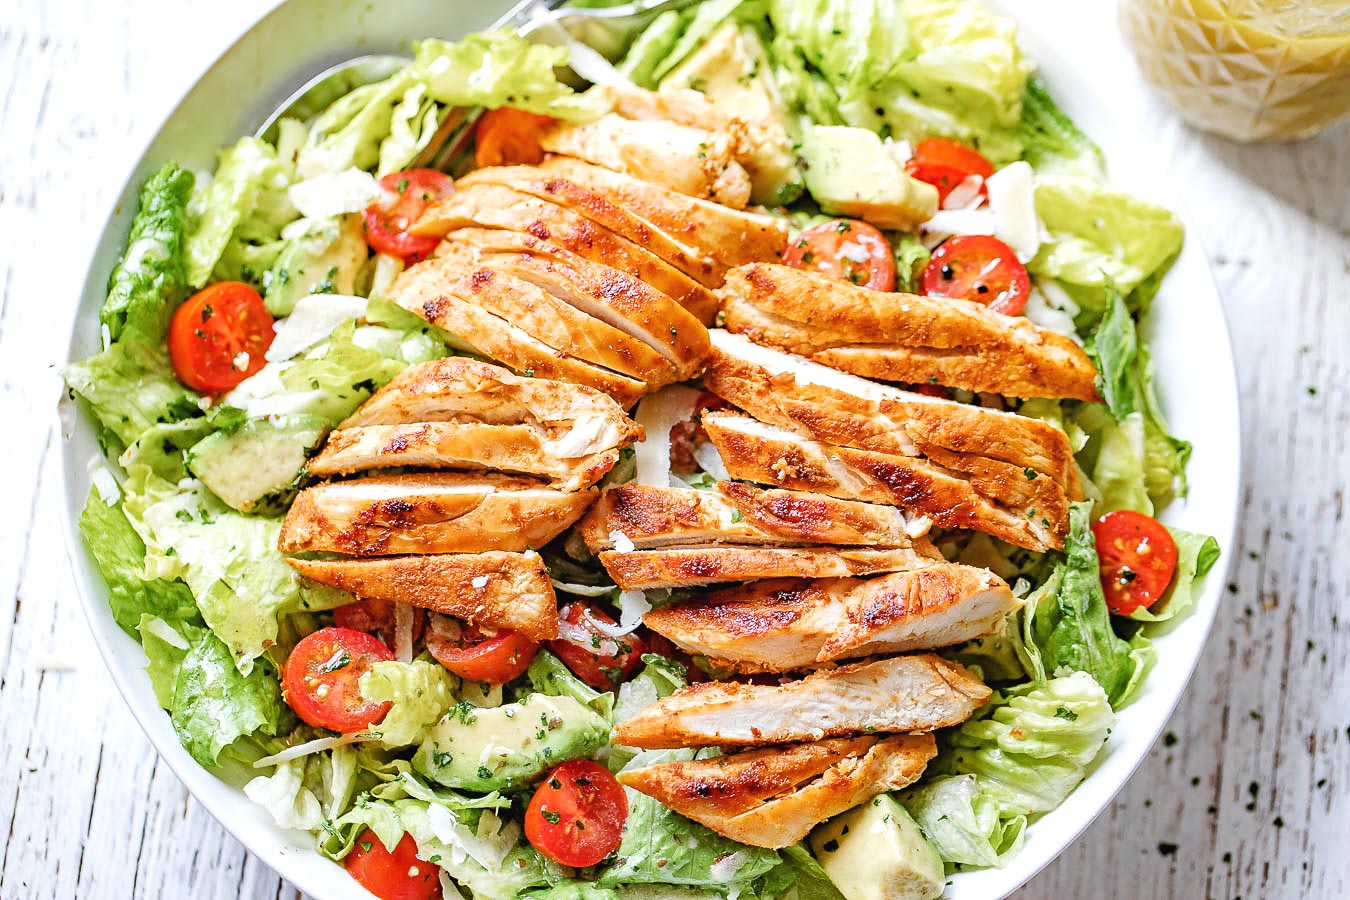 Chicken Salad Recipes: 16 Chicken Salad Recipe Ideas to Make All Summer Long — Eatwell101